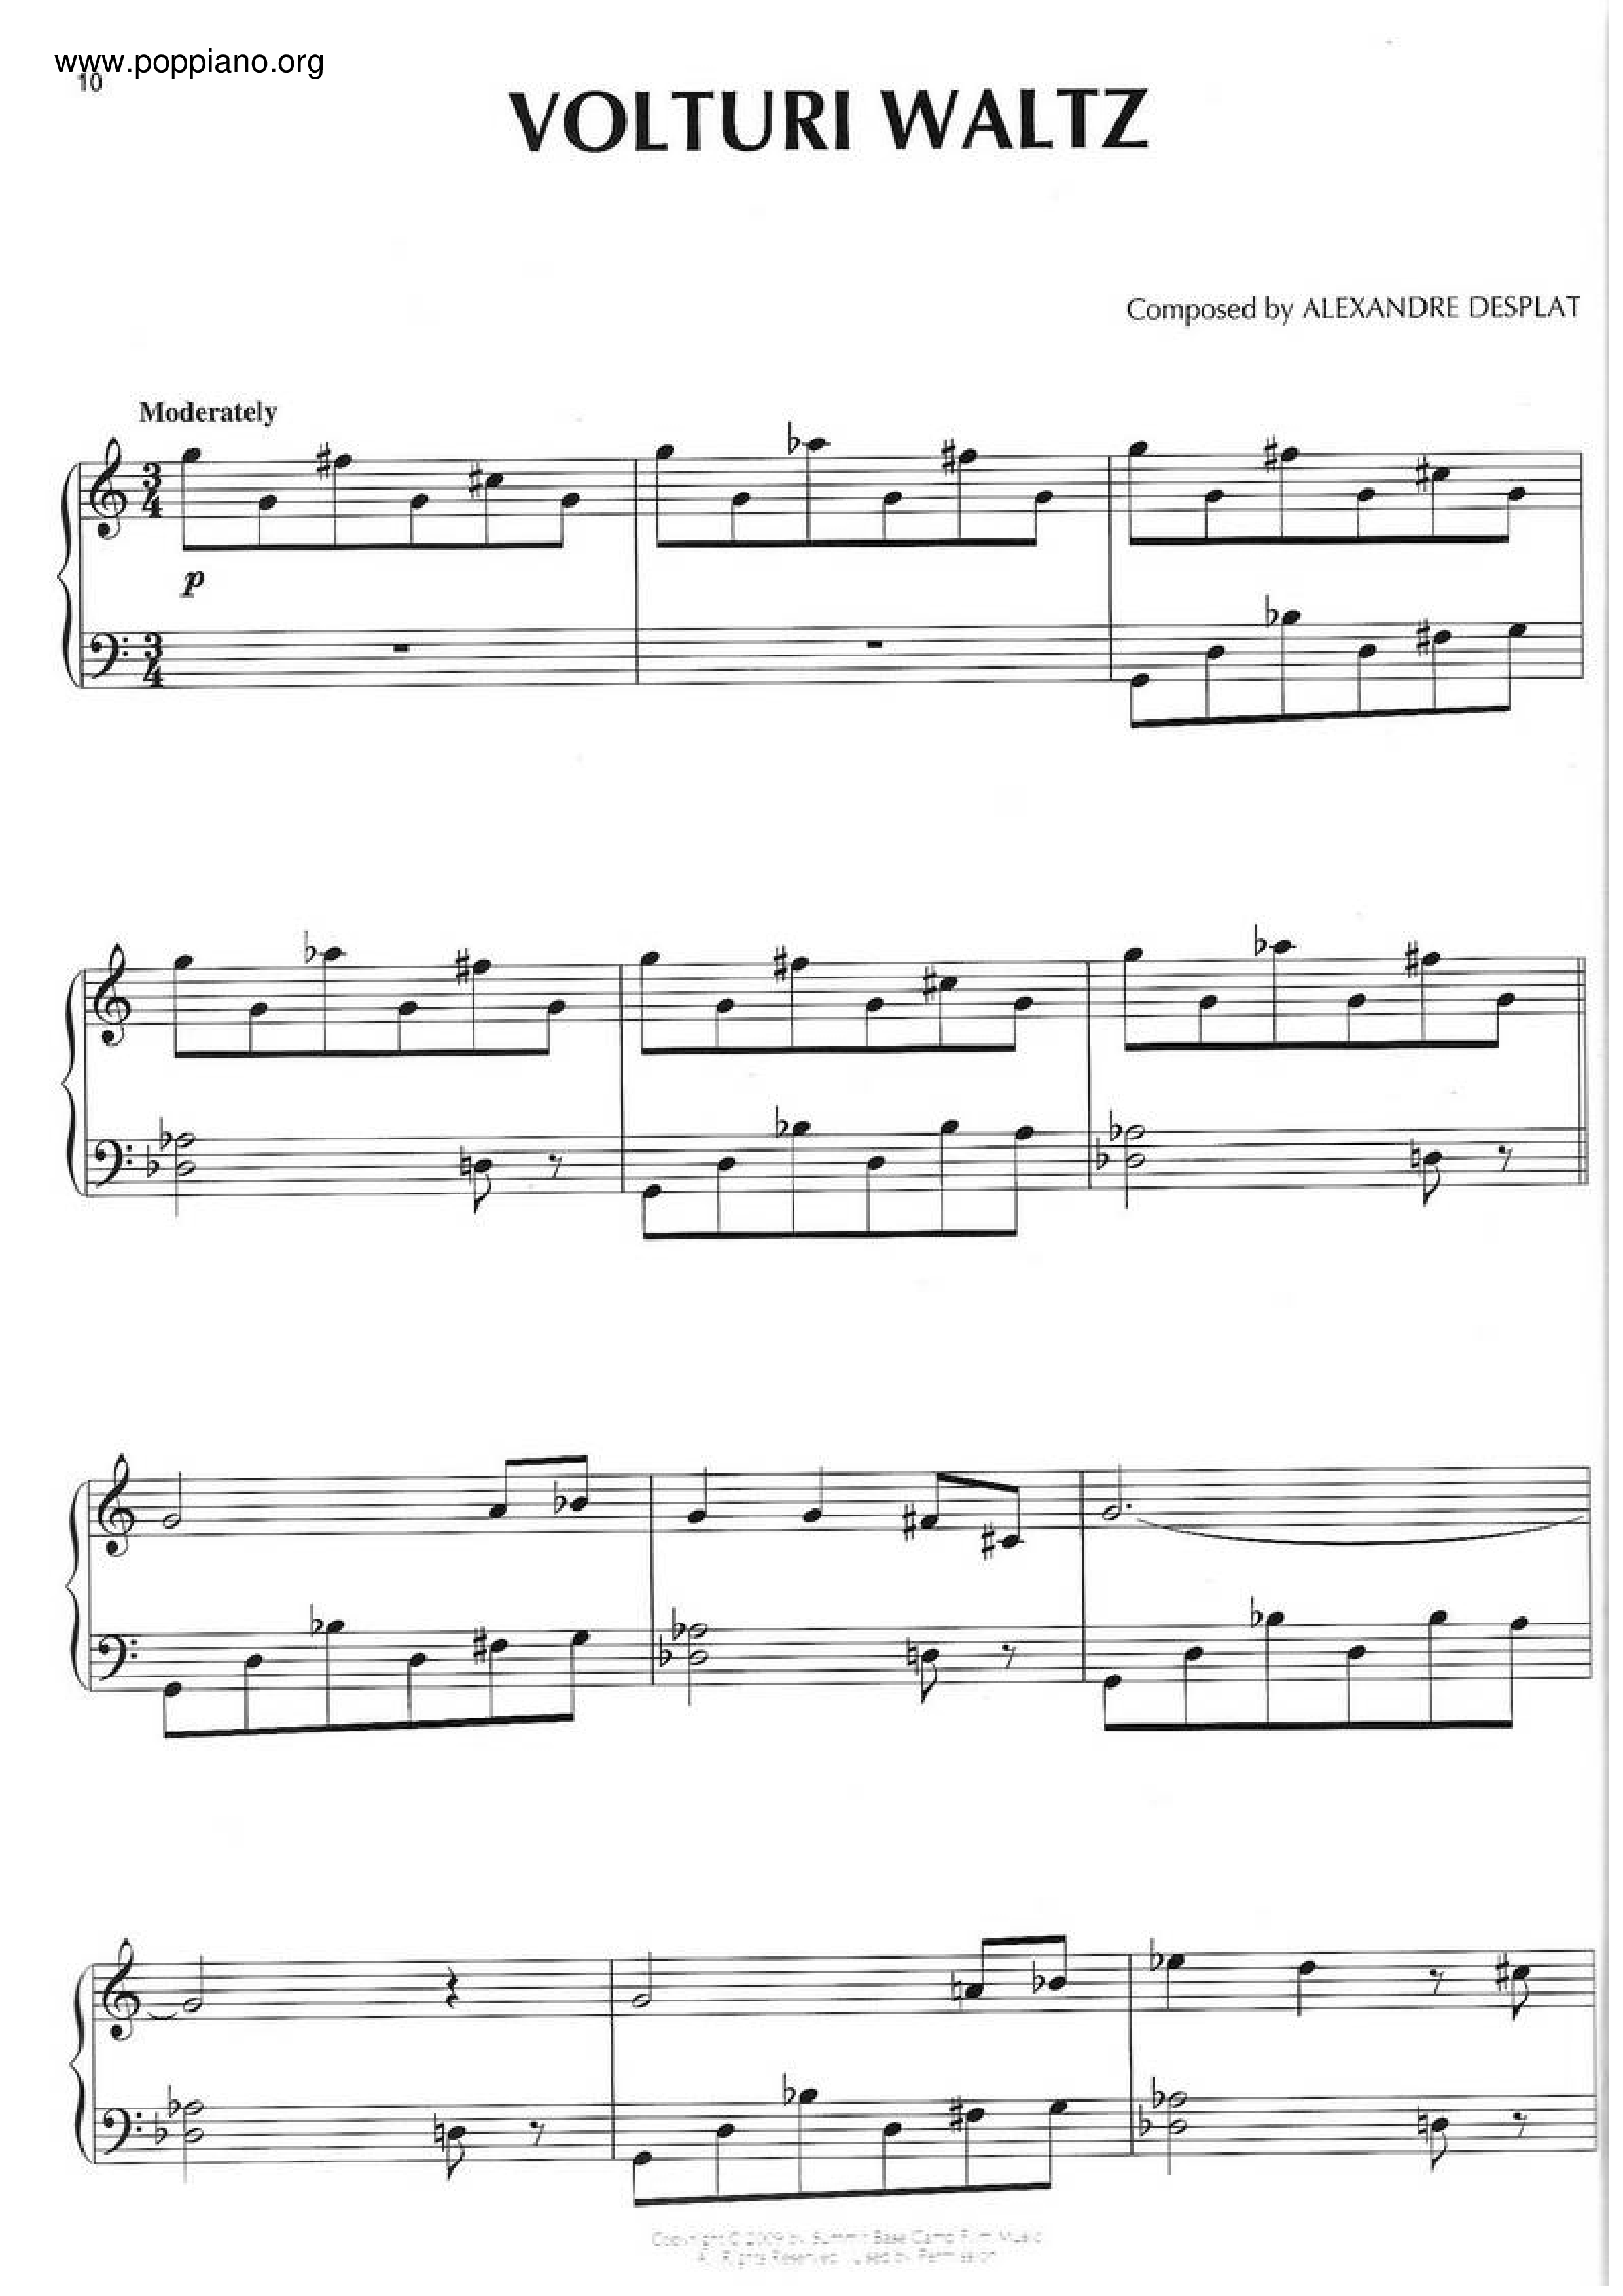 New Moon - Volturi Waltz Score